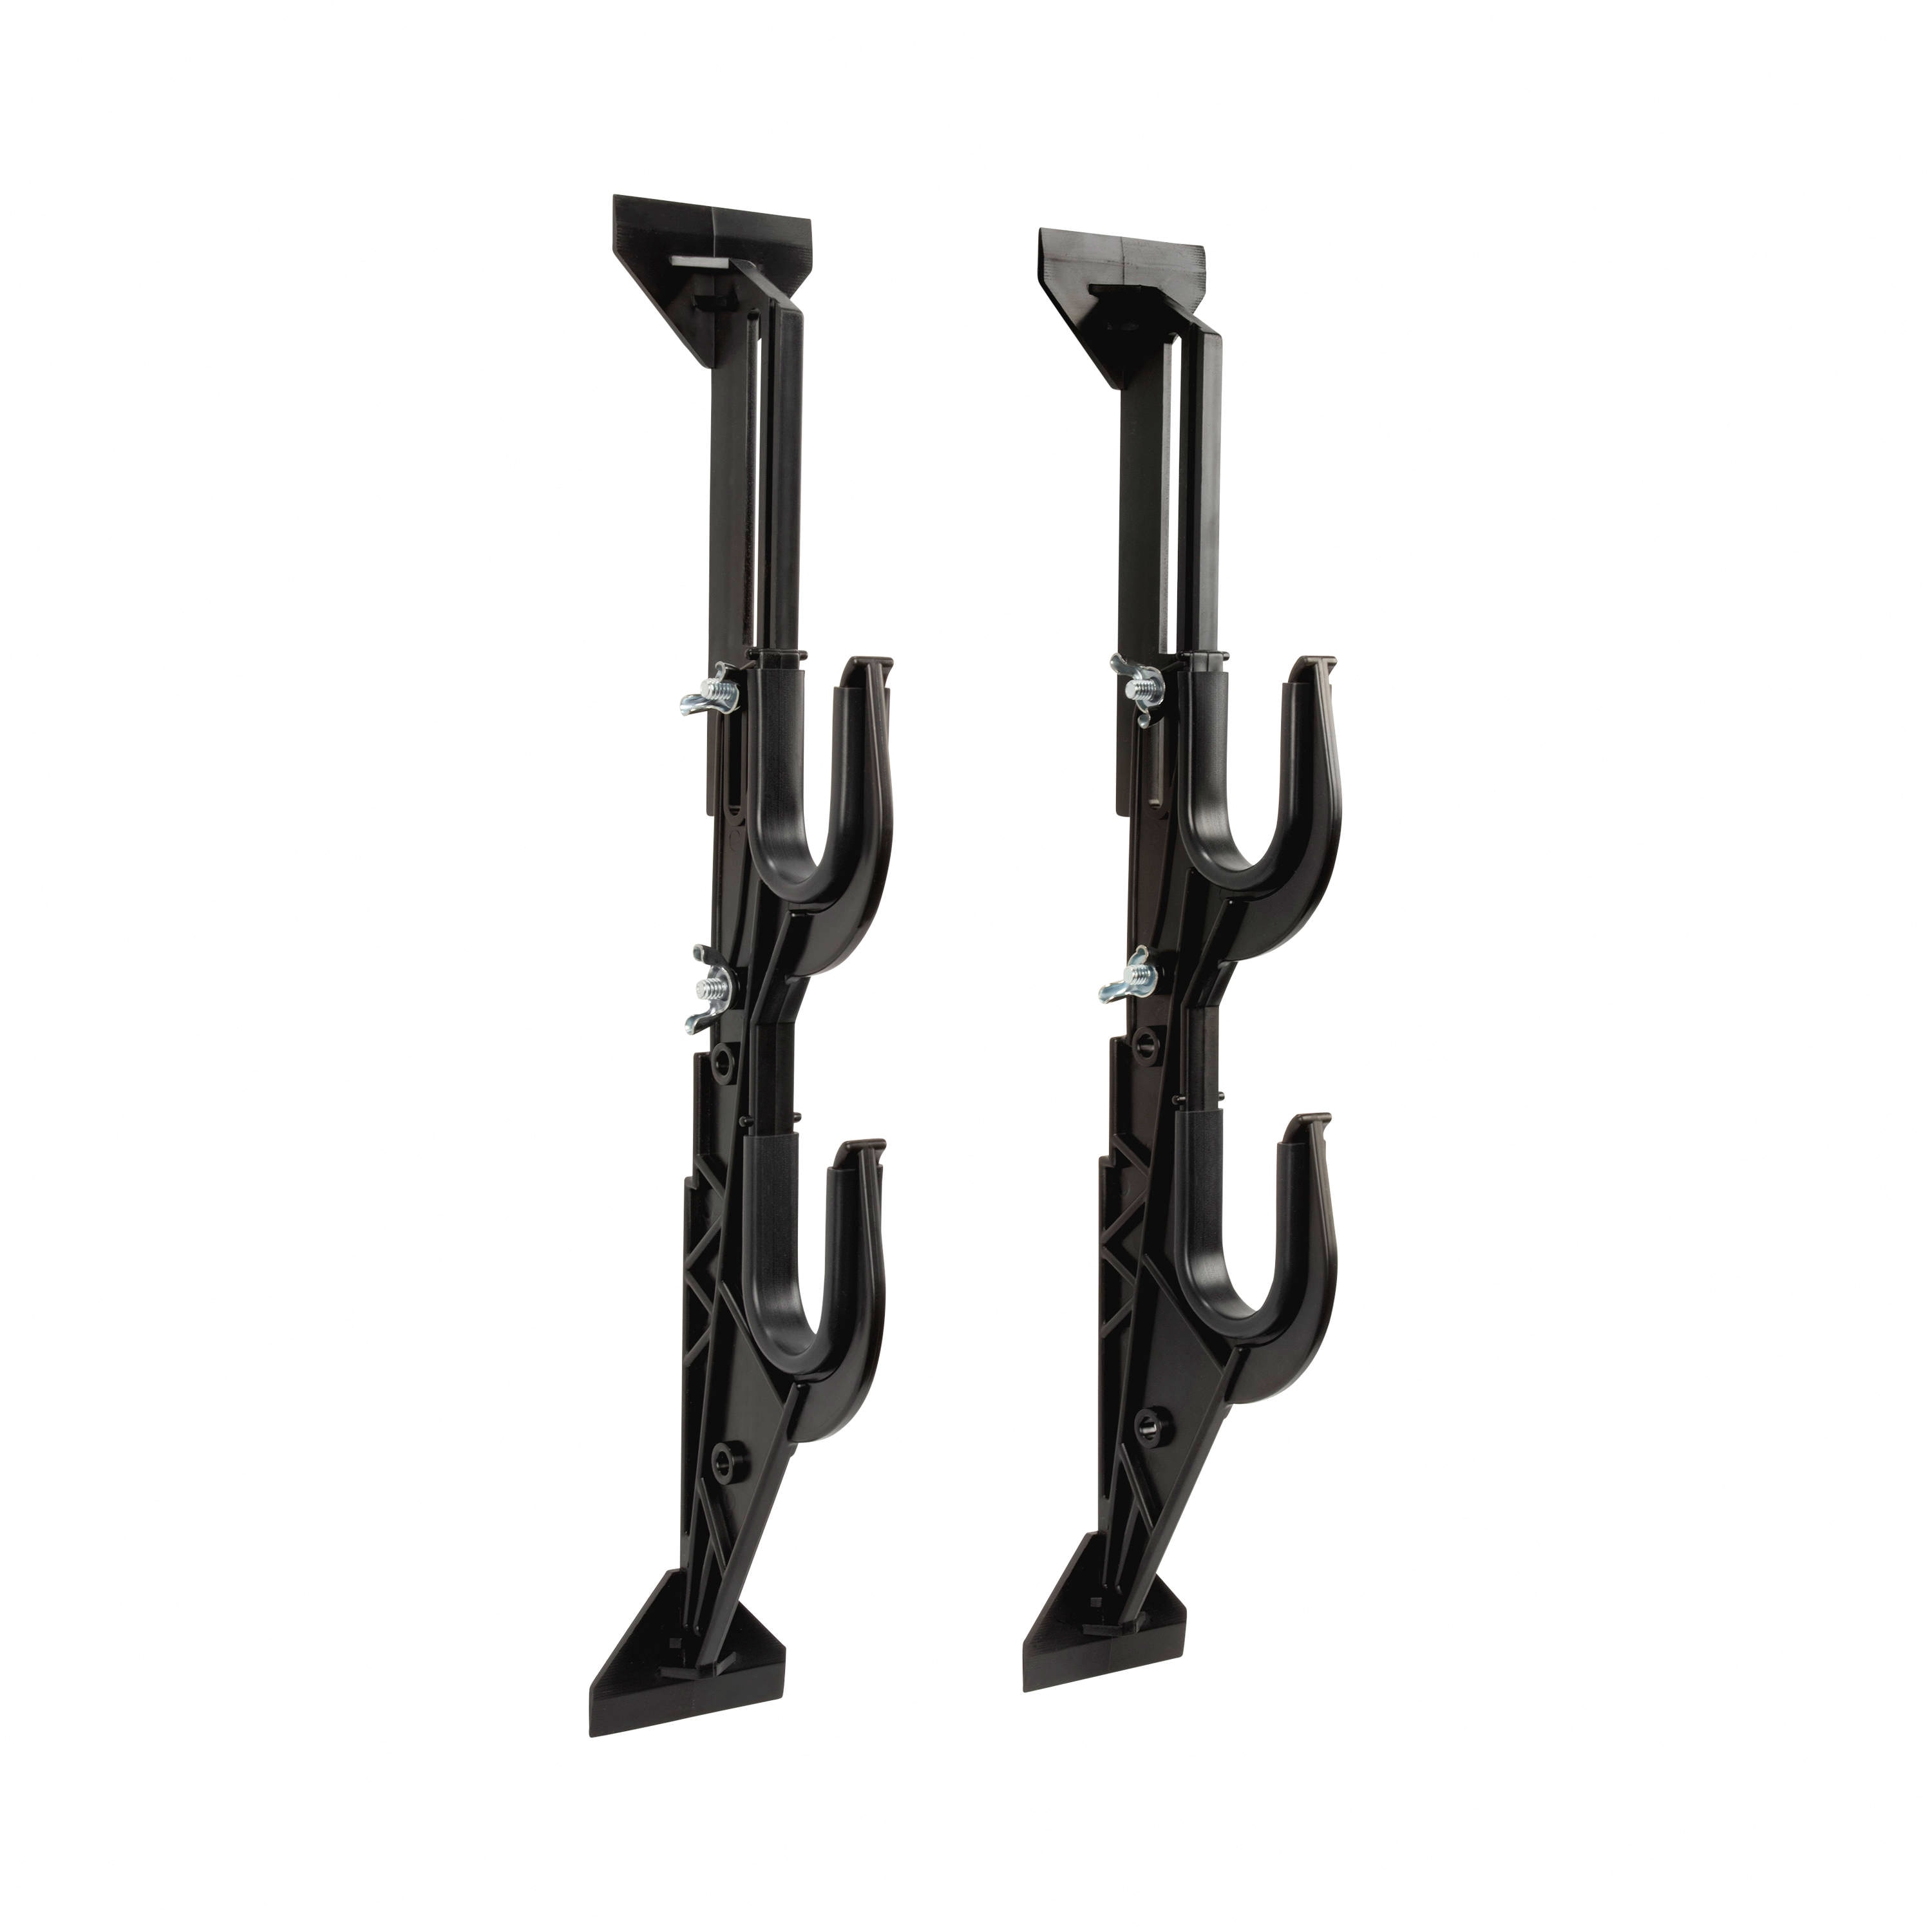  Gun Racks - Gun Rack Wall Mount - Gun Hangers Hooks for Shotgun  Rifle Hunting - 2pcs PVC Coated Metal J Hook : Sports & Outdoors